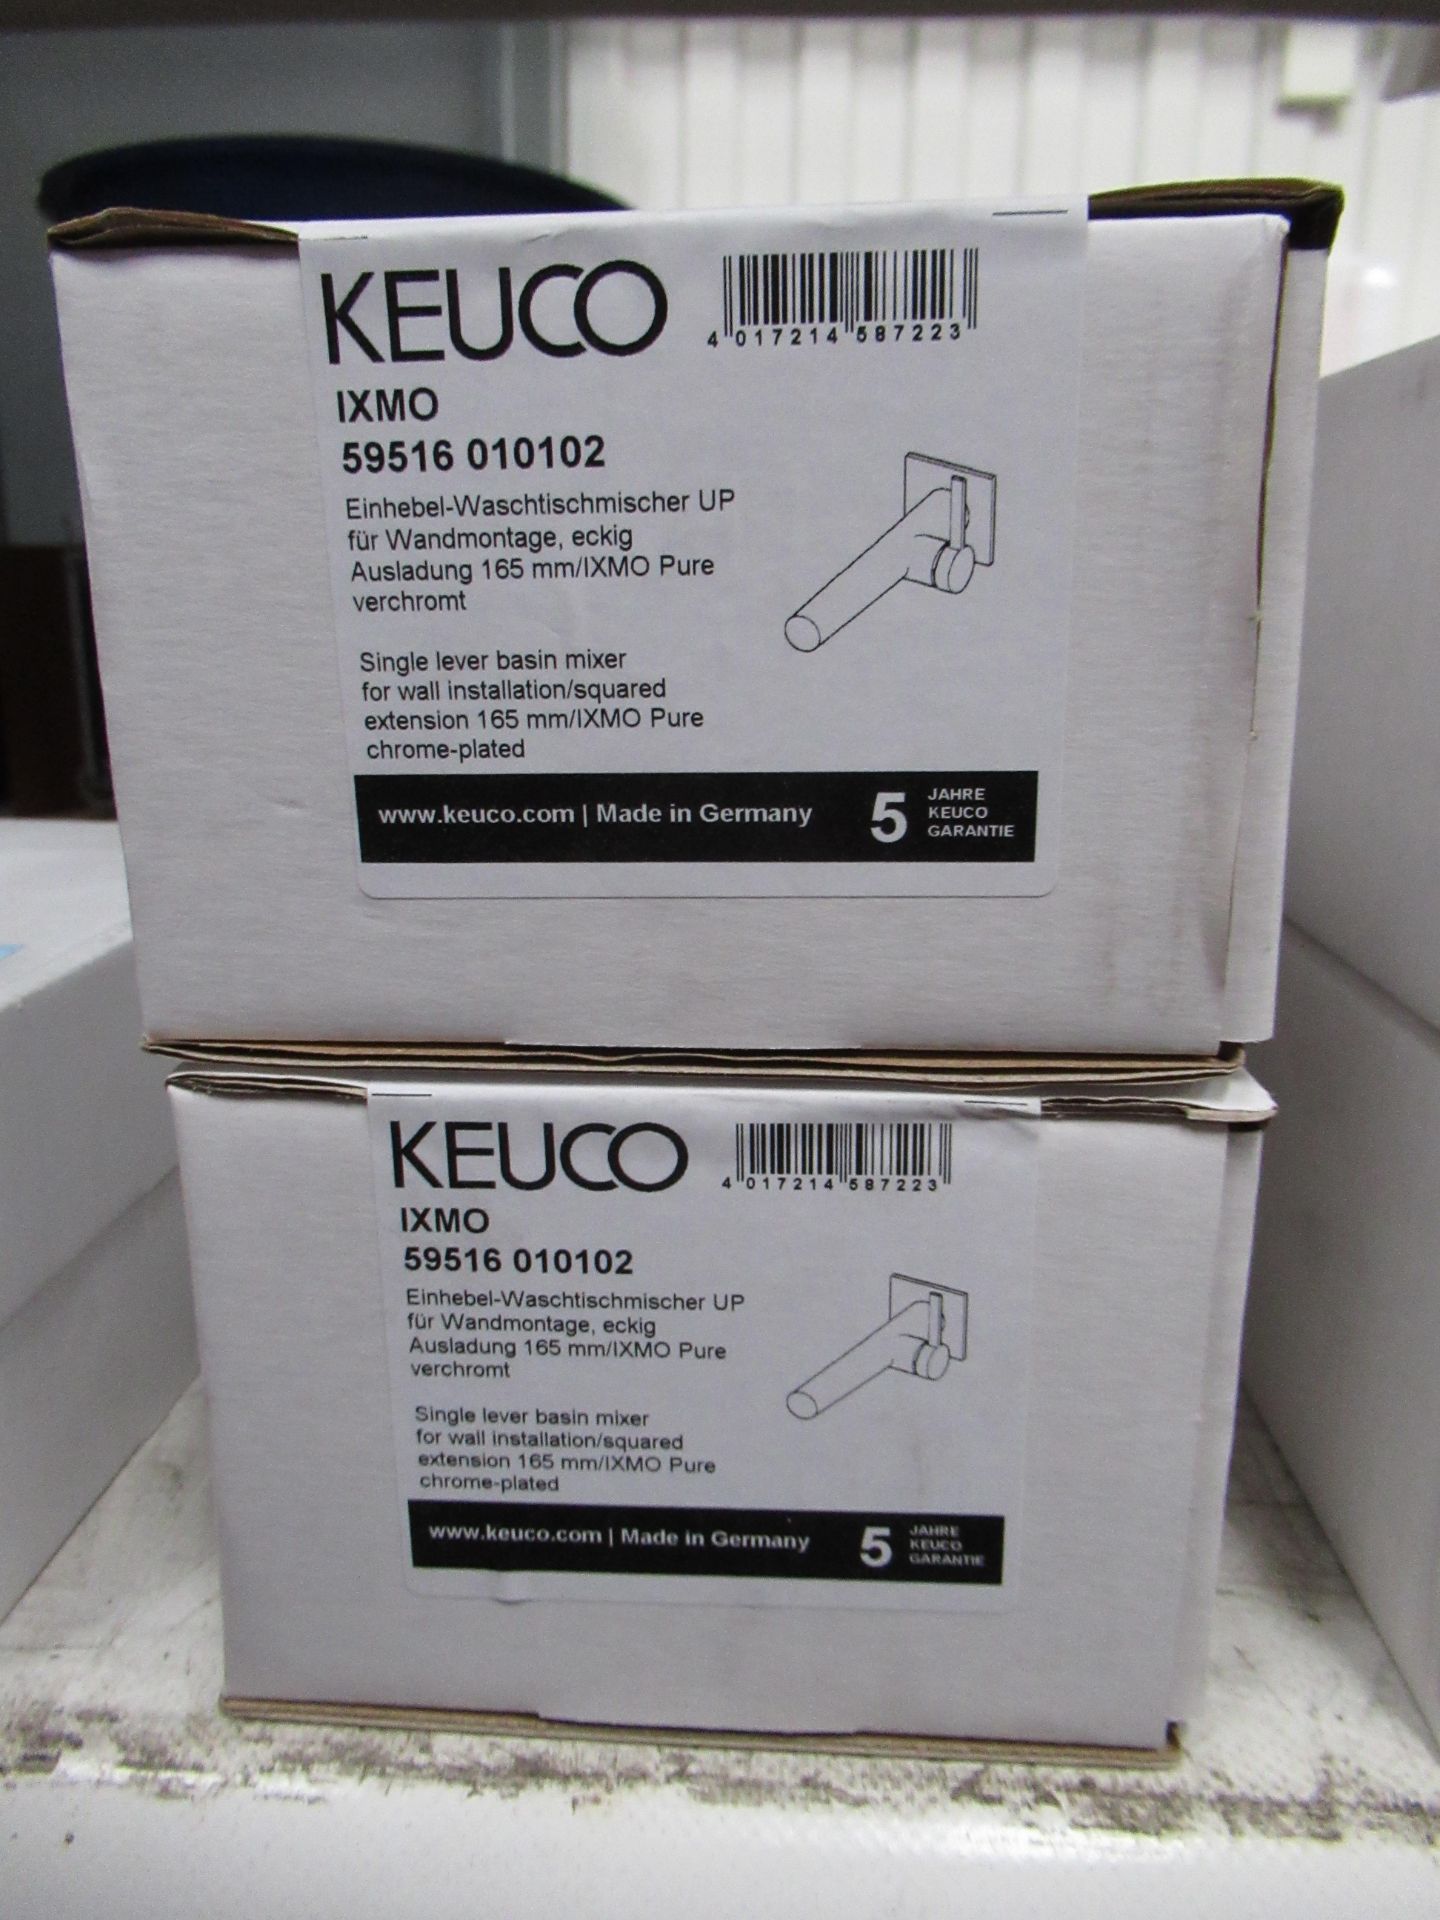 2 x Keuco IXMO Single Lever Basin Mixer Chrome Plated, P/N 59516-010102